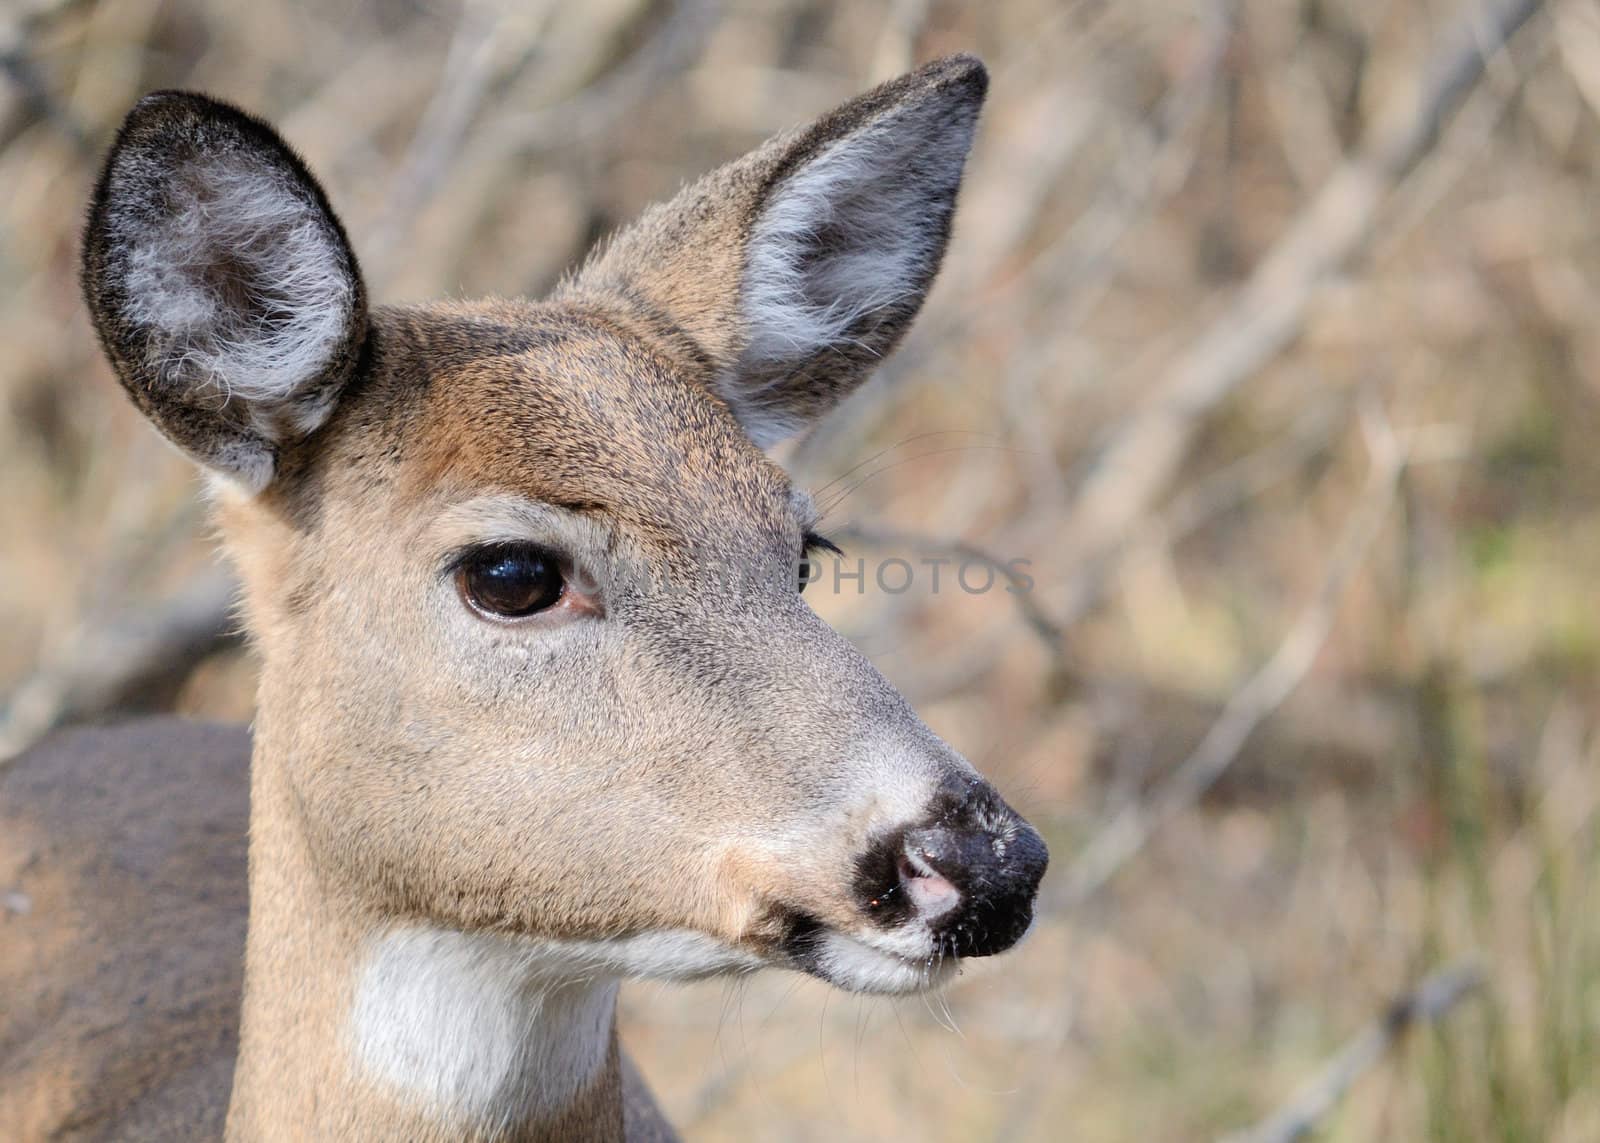 Whitetail deer doe close up head shot.